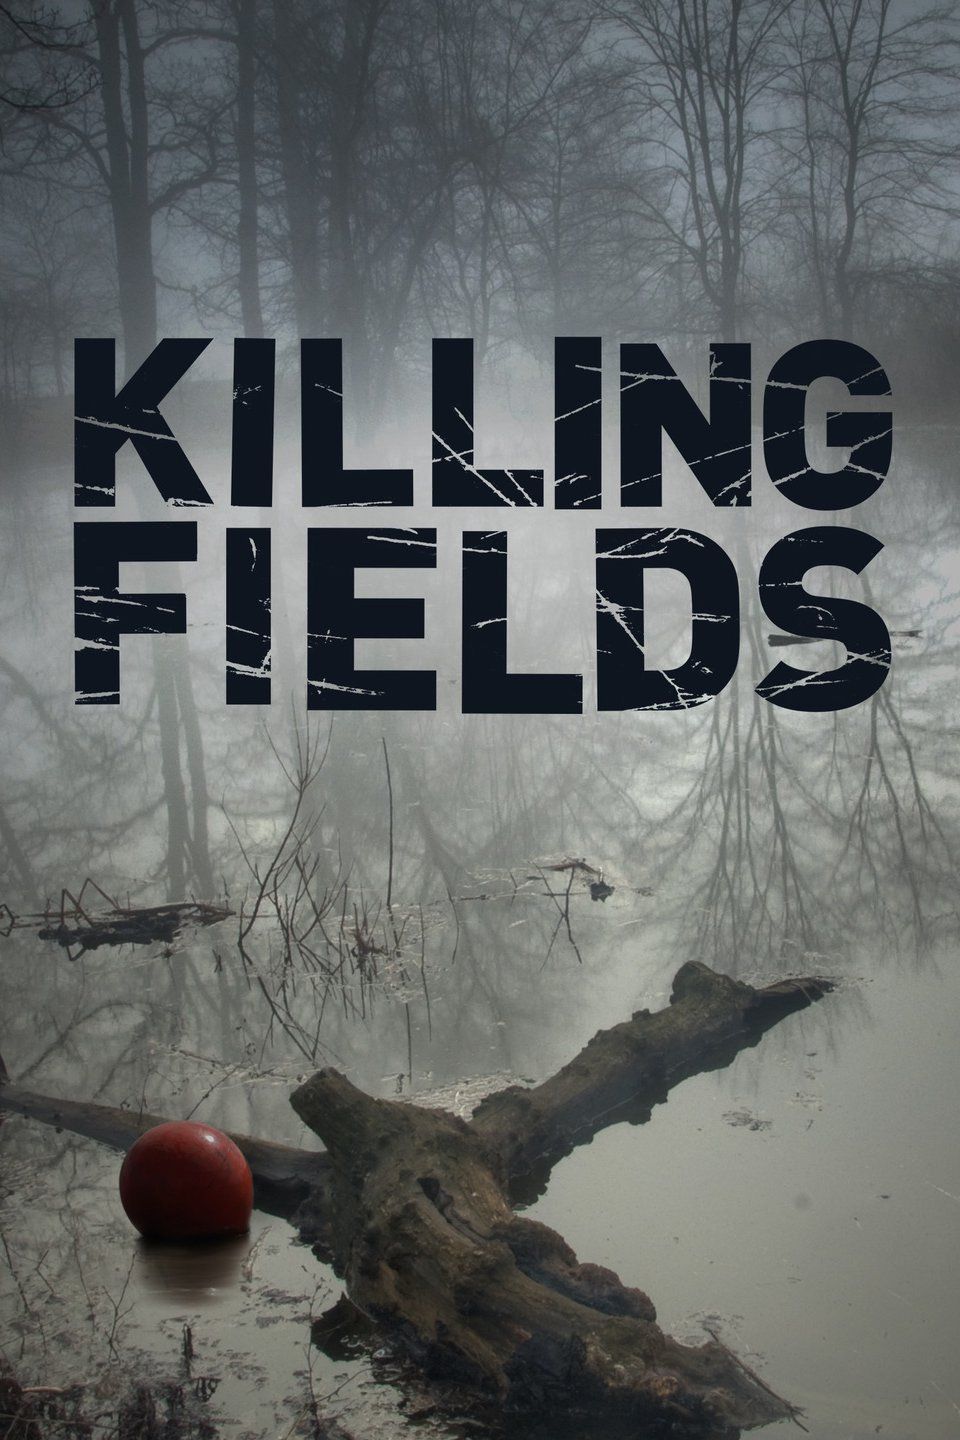 Watch The Killing Season Season 1 Episode 2 Online Free